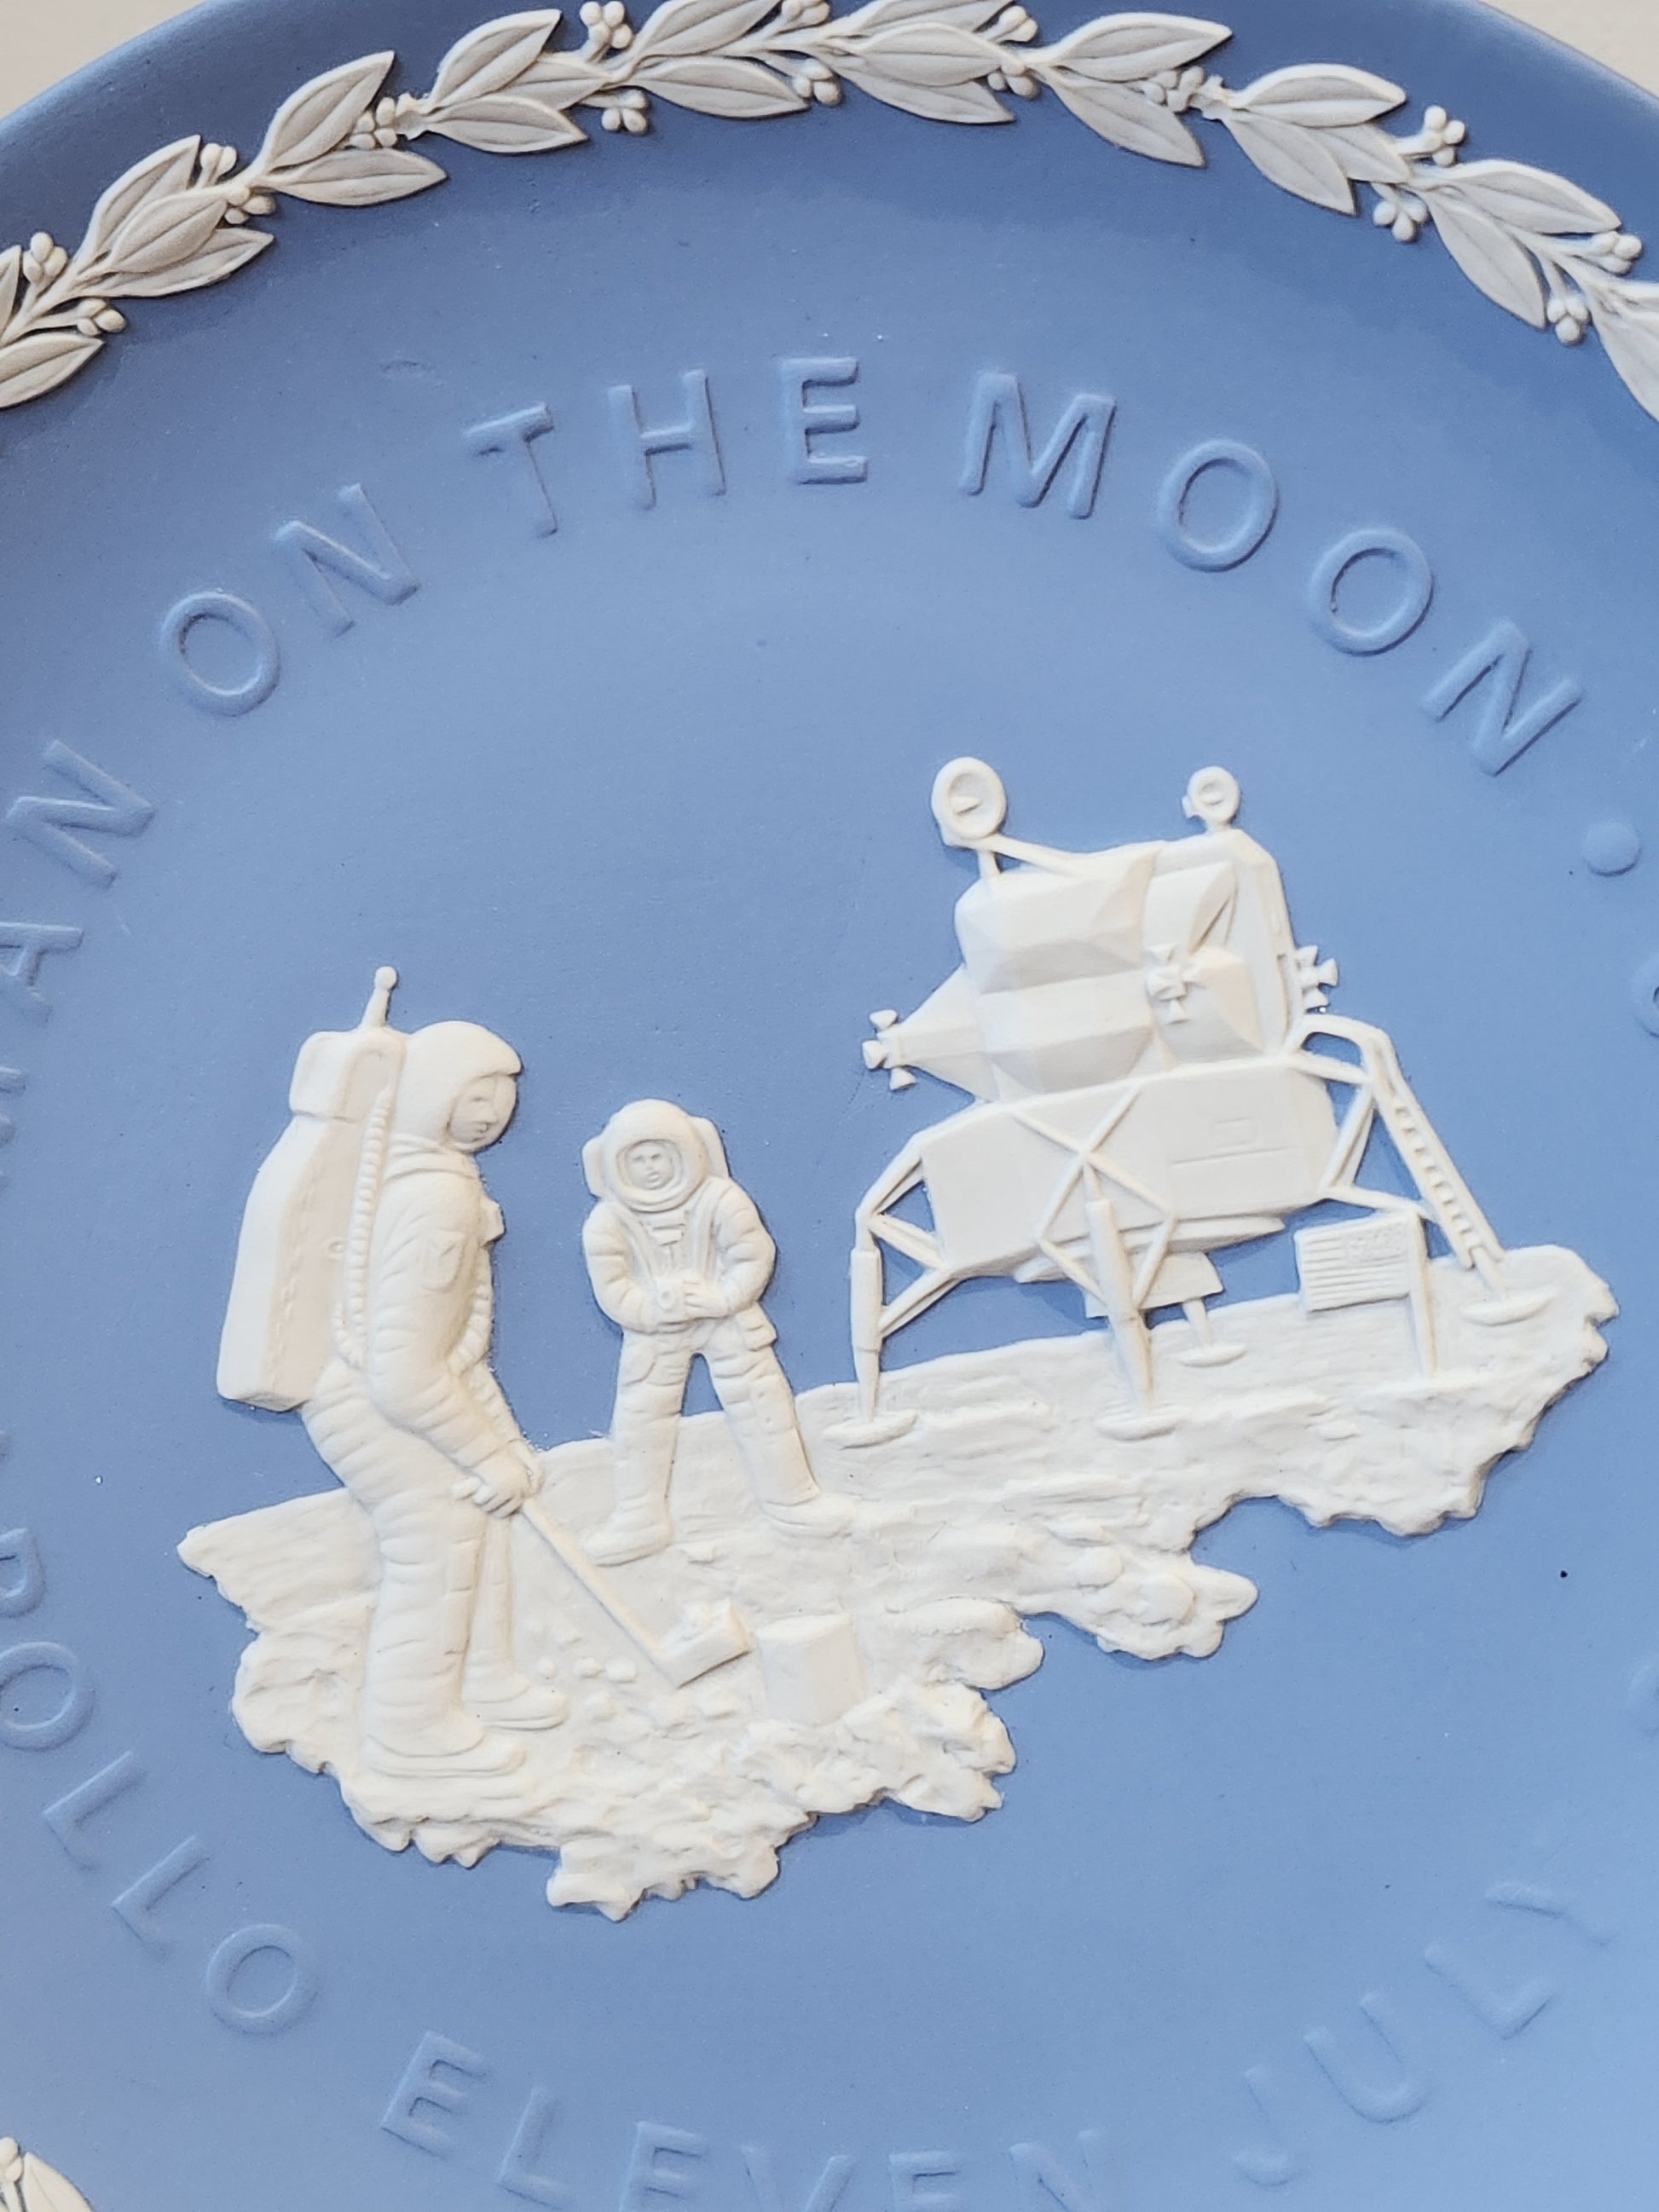 Wedgwood Blue Apollo Moon Landing Plate